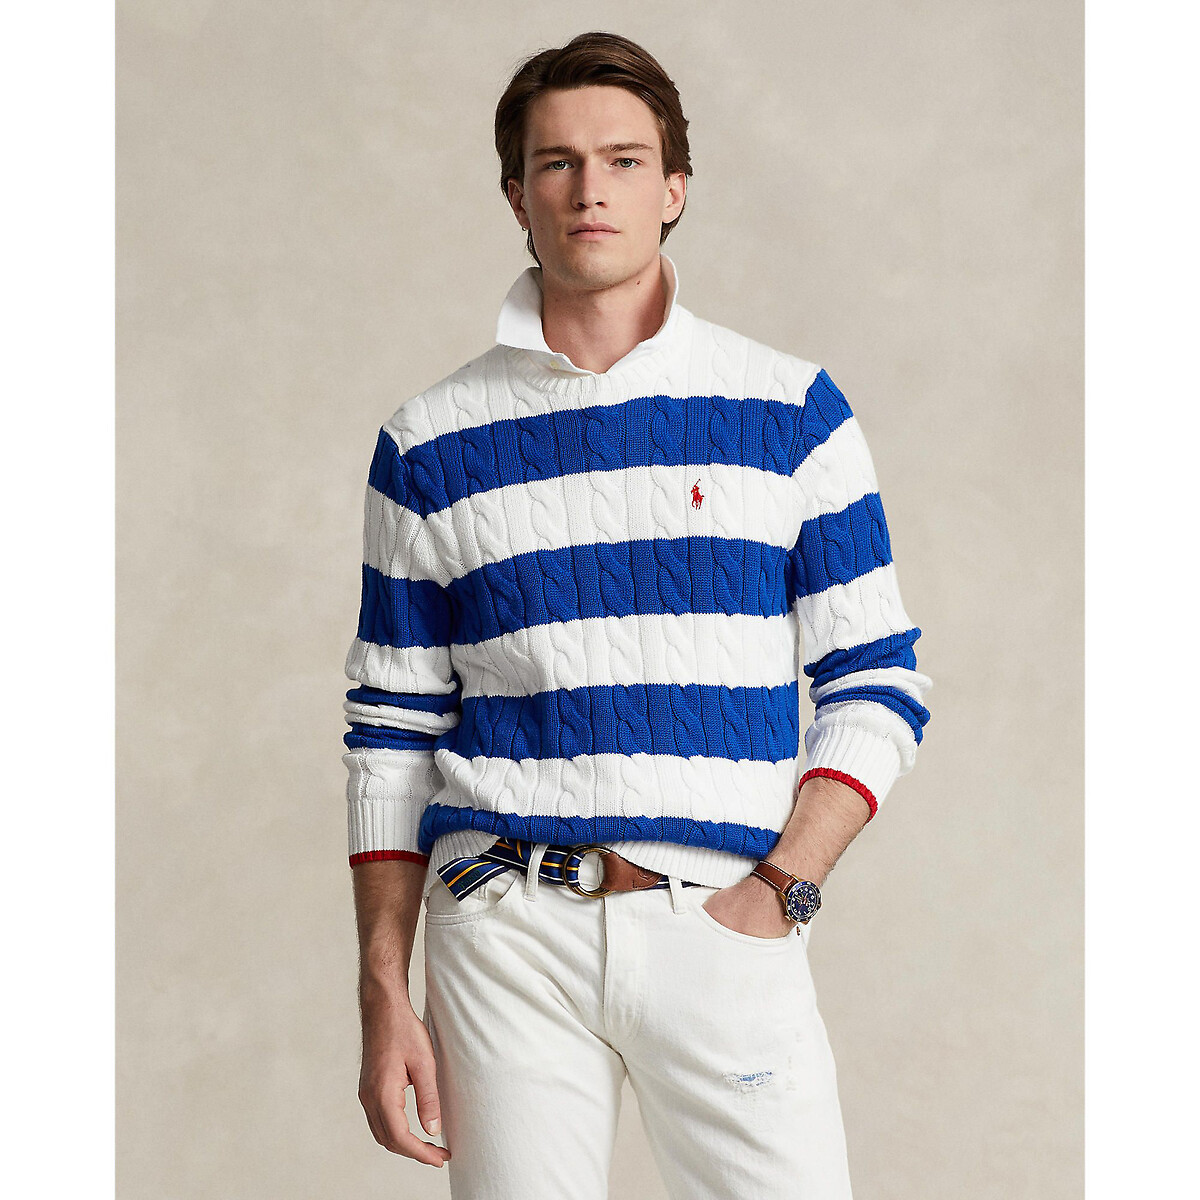 Пуловер-тельняшка из витого трикотажа L синий пуловер joyce из витого трикотажа верх с начесом xl бежевый